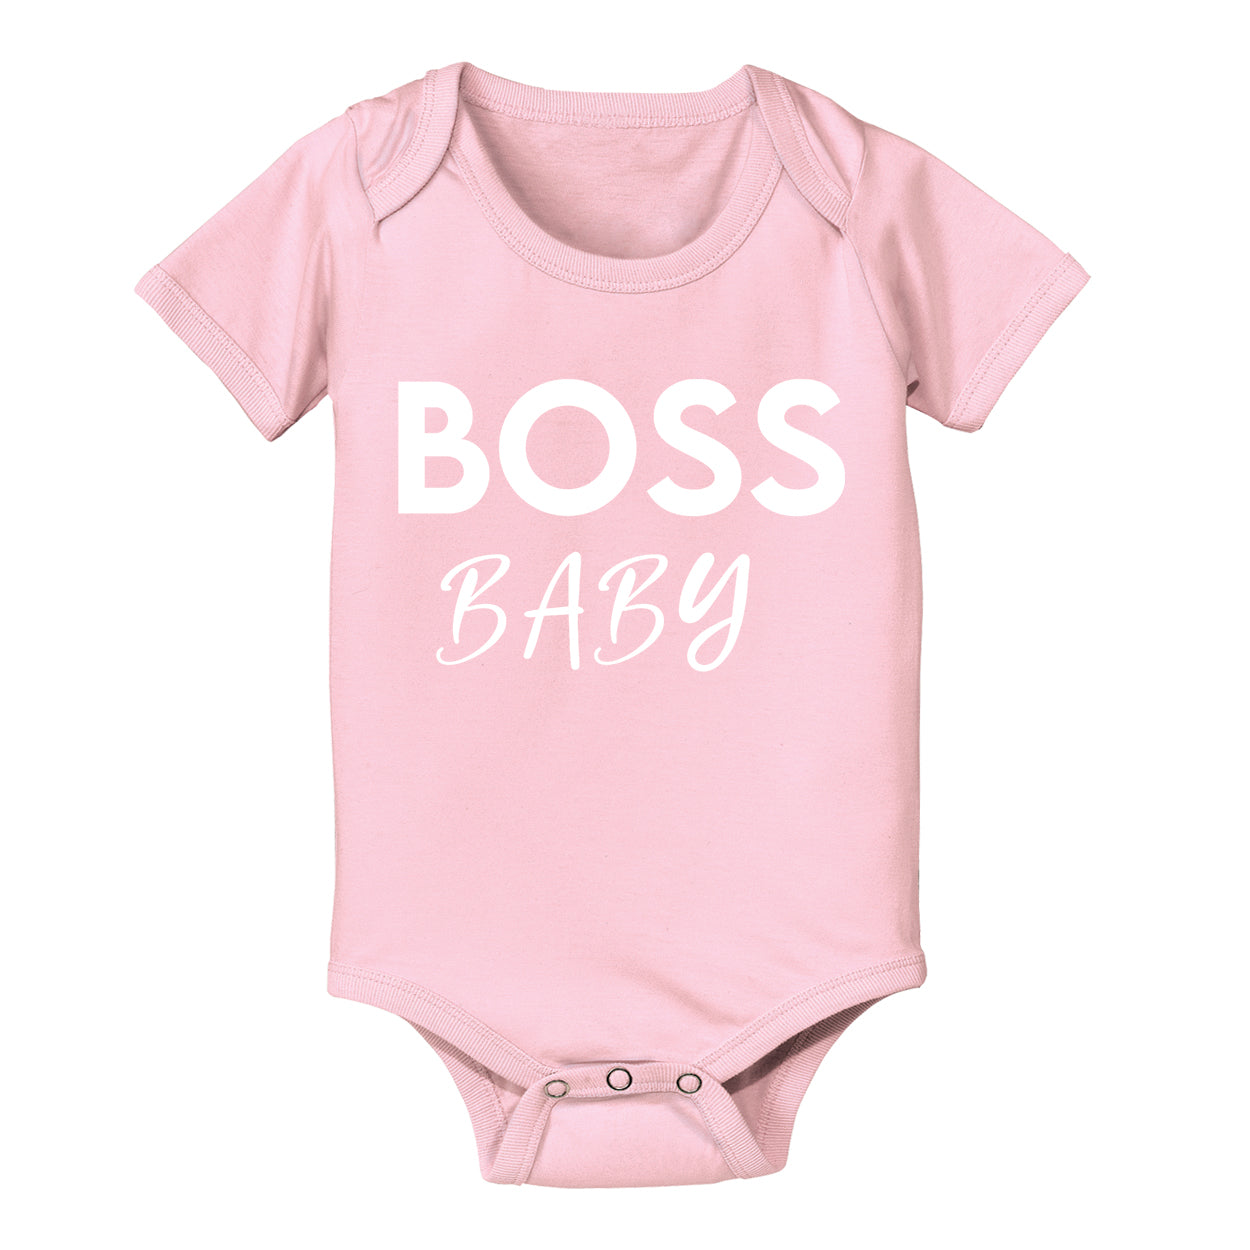 Boss Baby Tshirt - Donkey Tees